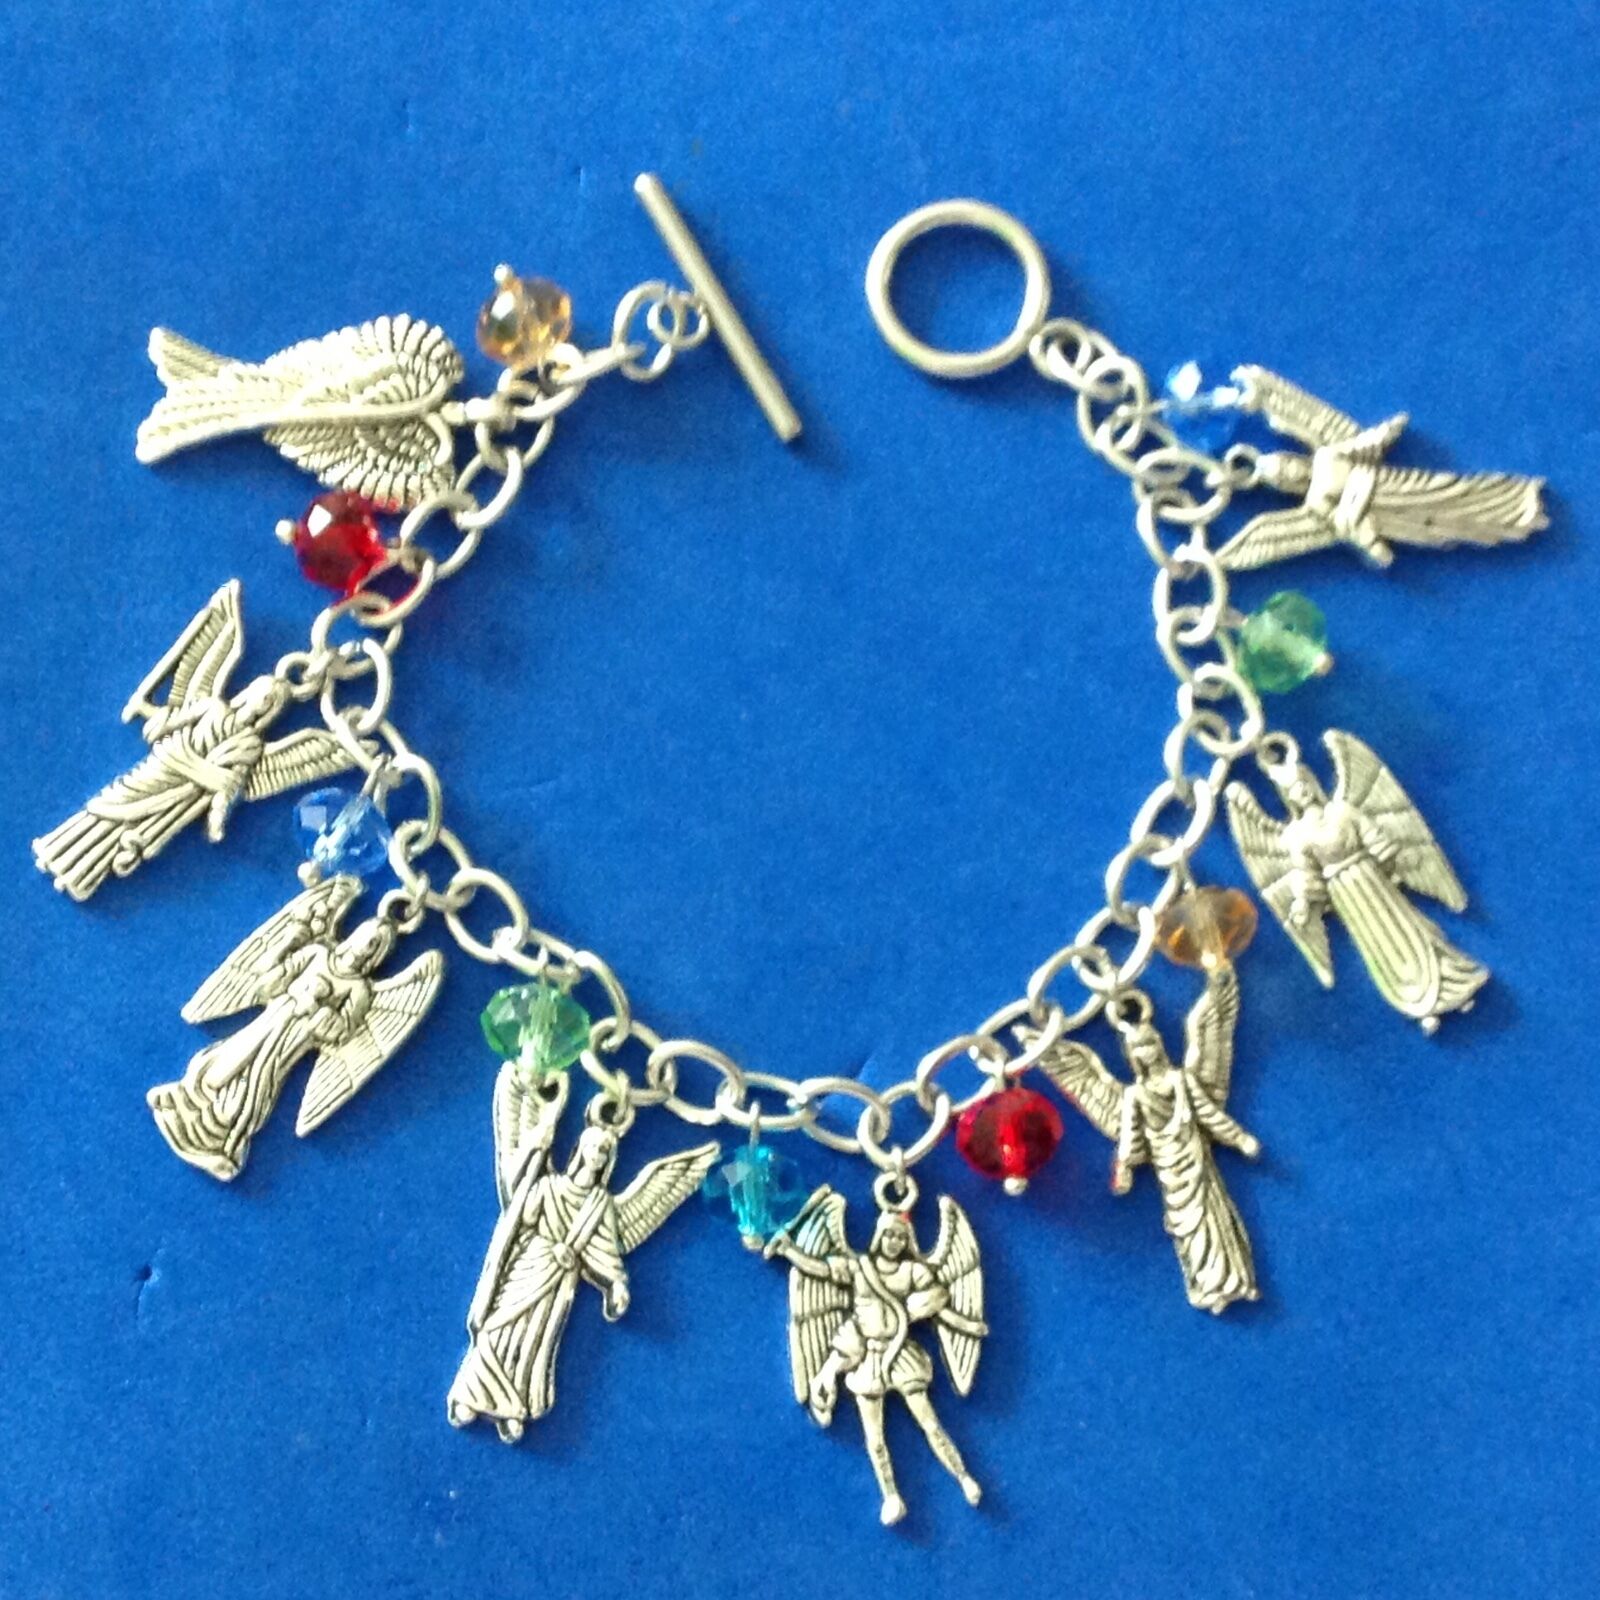 7 Archangels Charm Bracelet Multi Color Michael, Stainless Steel Chain 8.5”